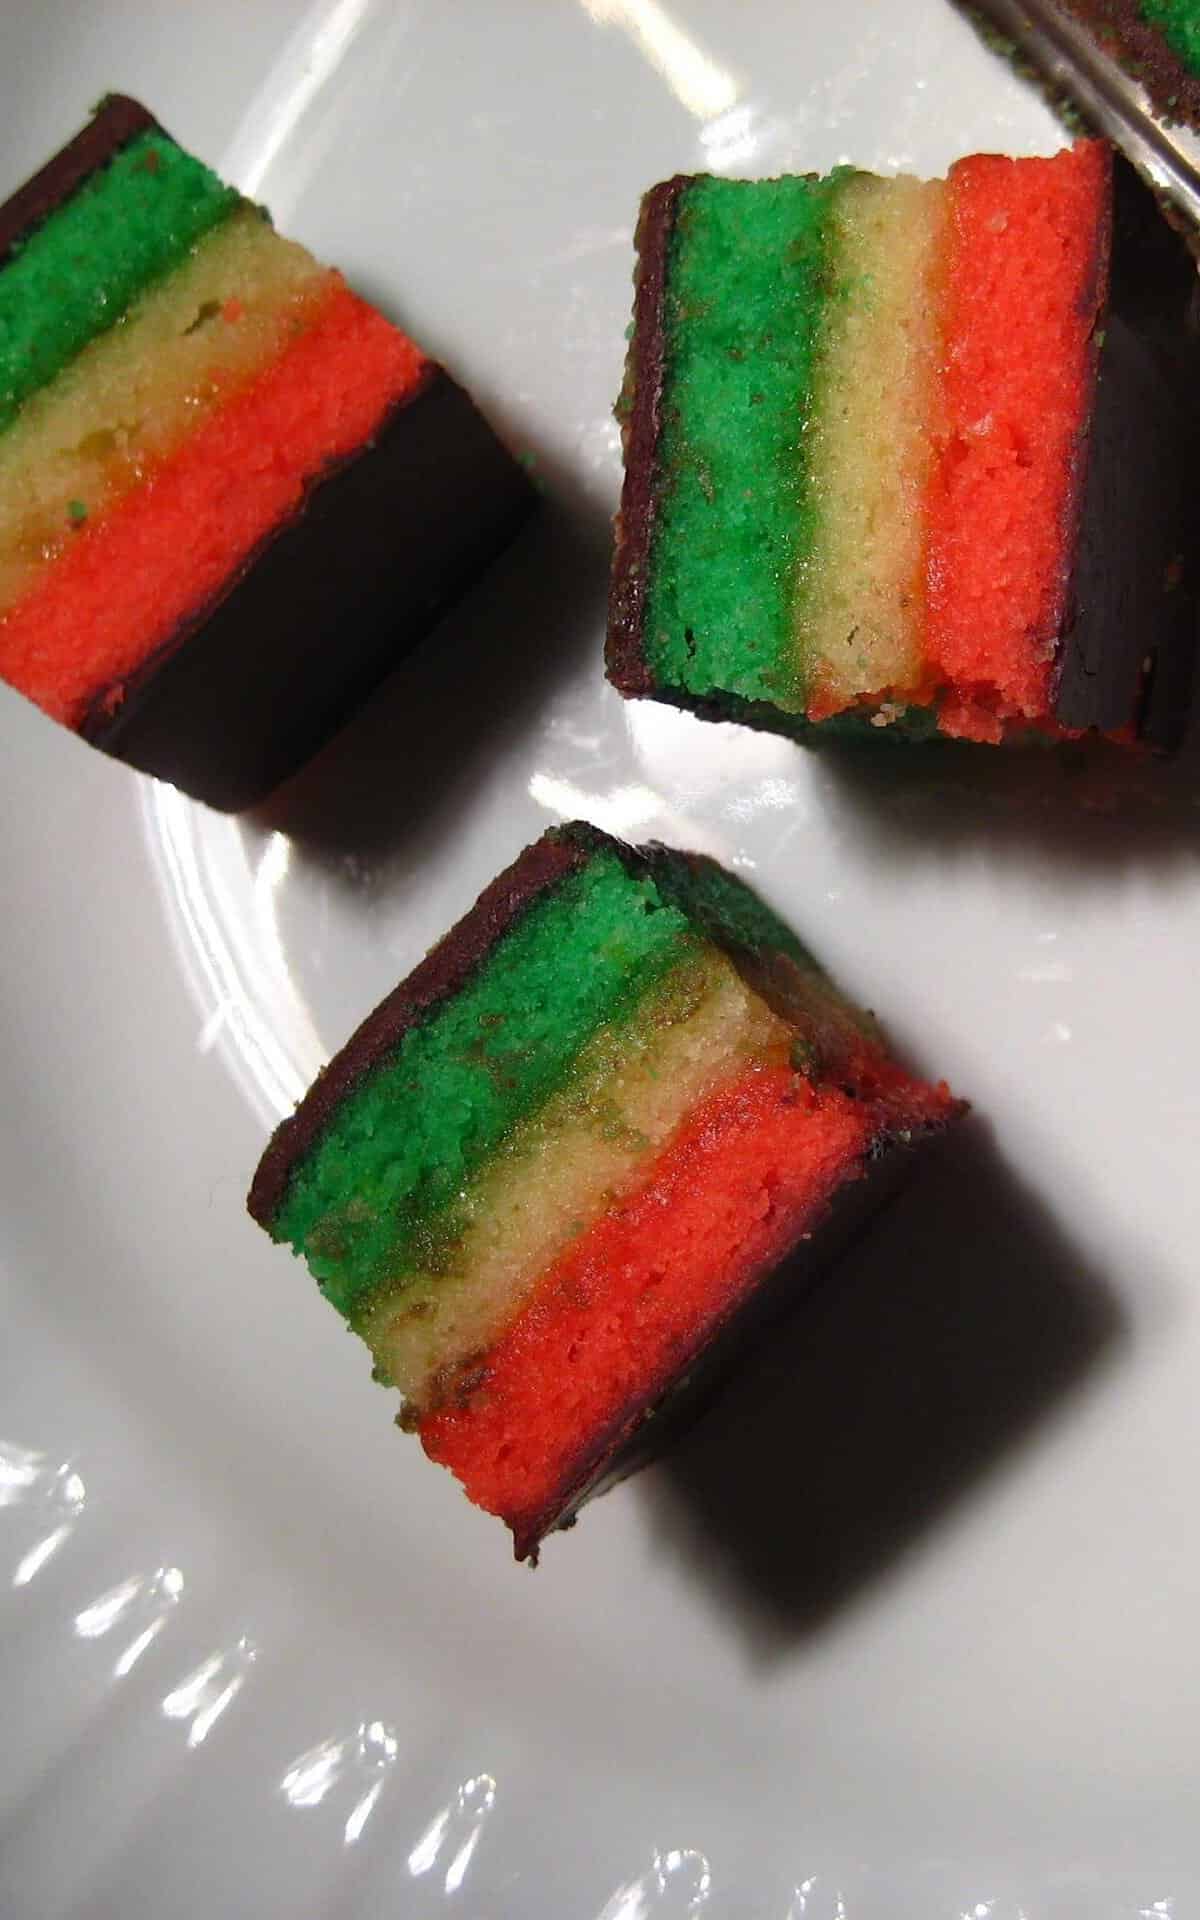  Get ready to taste the rainbow!